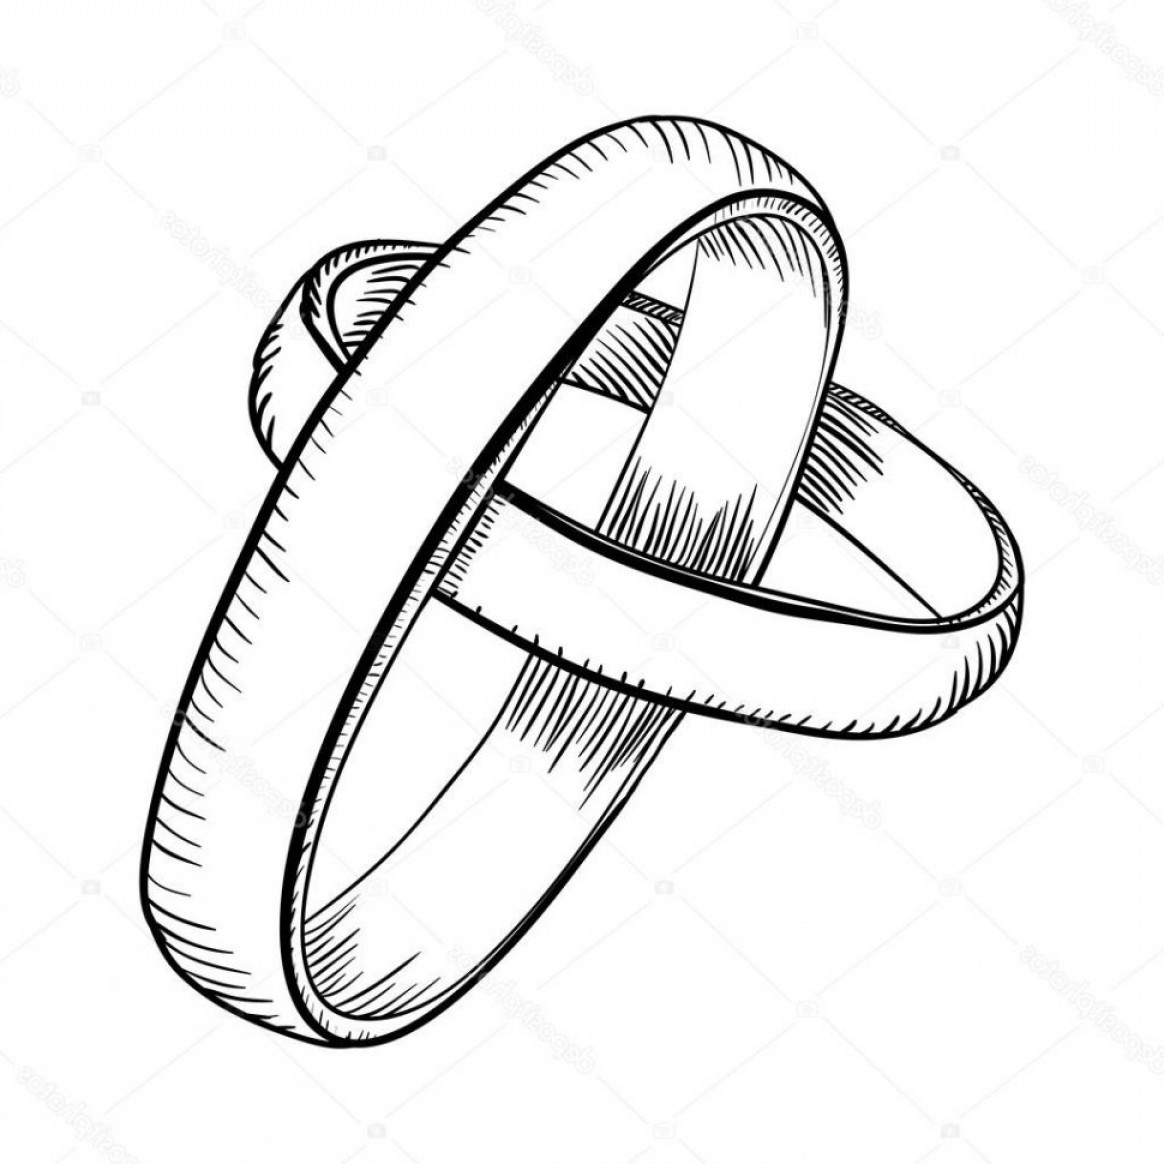 Drawings Of Wedding Rings
 Engagement Ring Drawing at GetDrawings